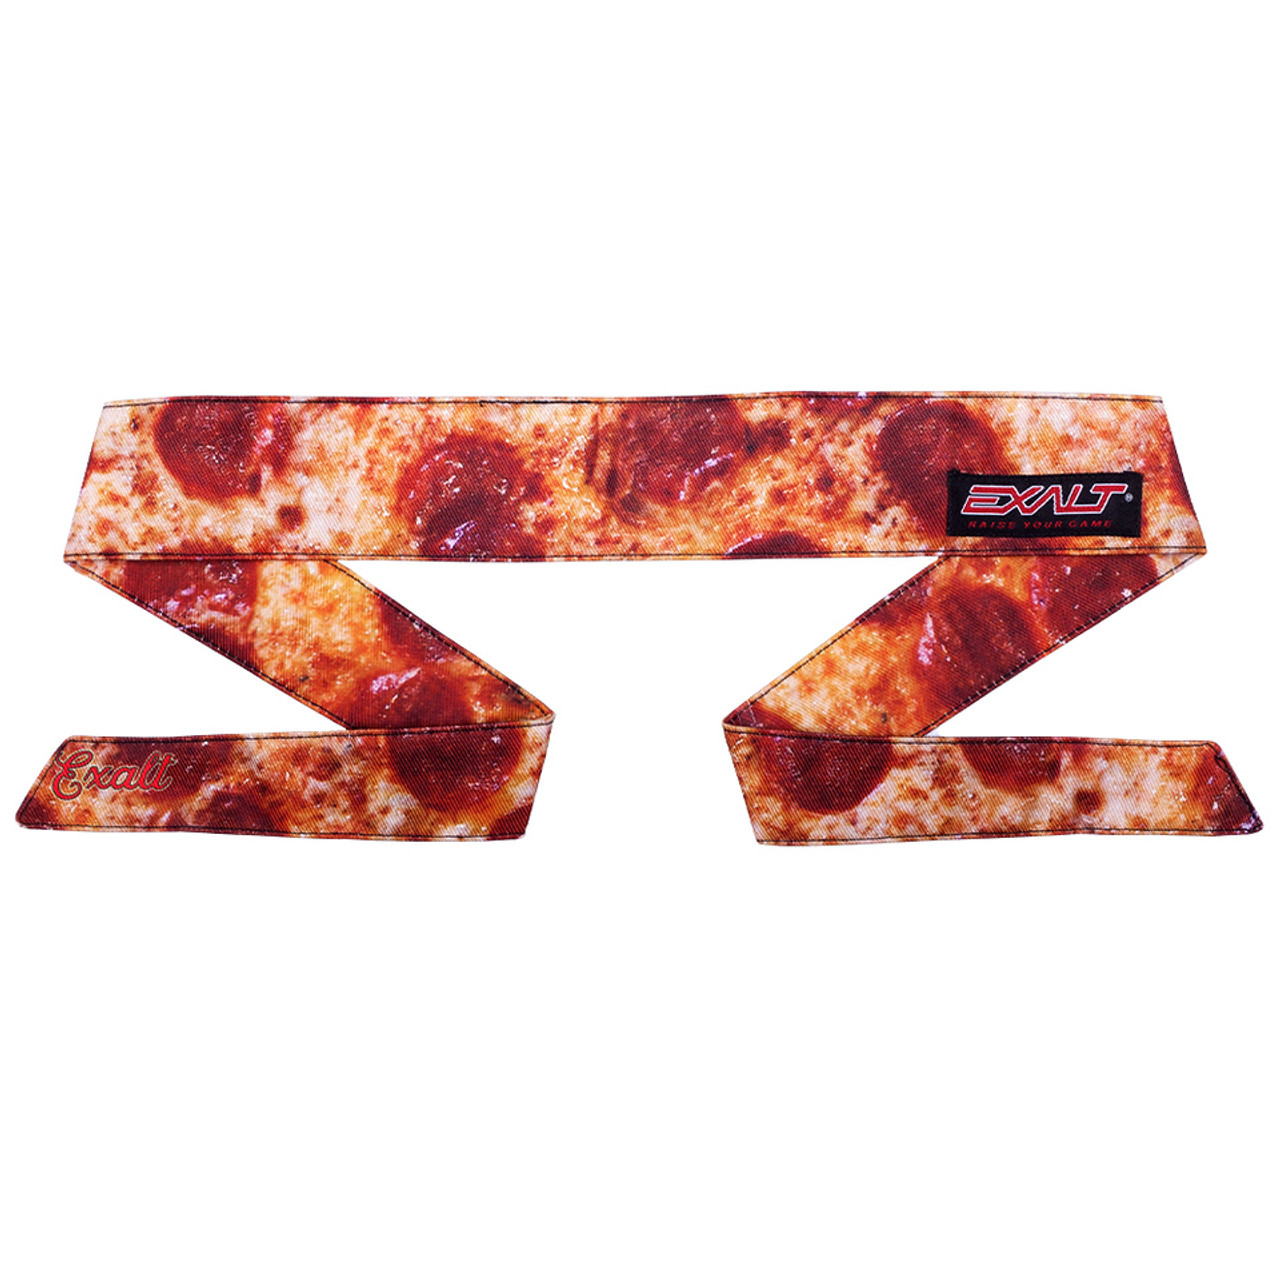 Exalt Headband - Pizza